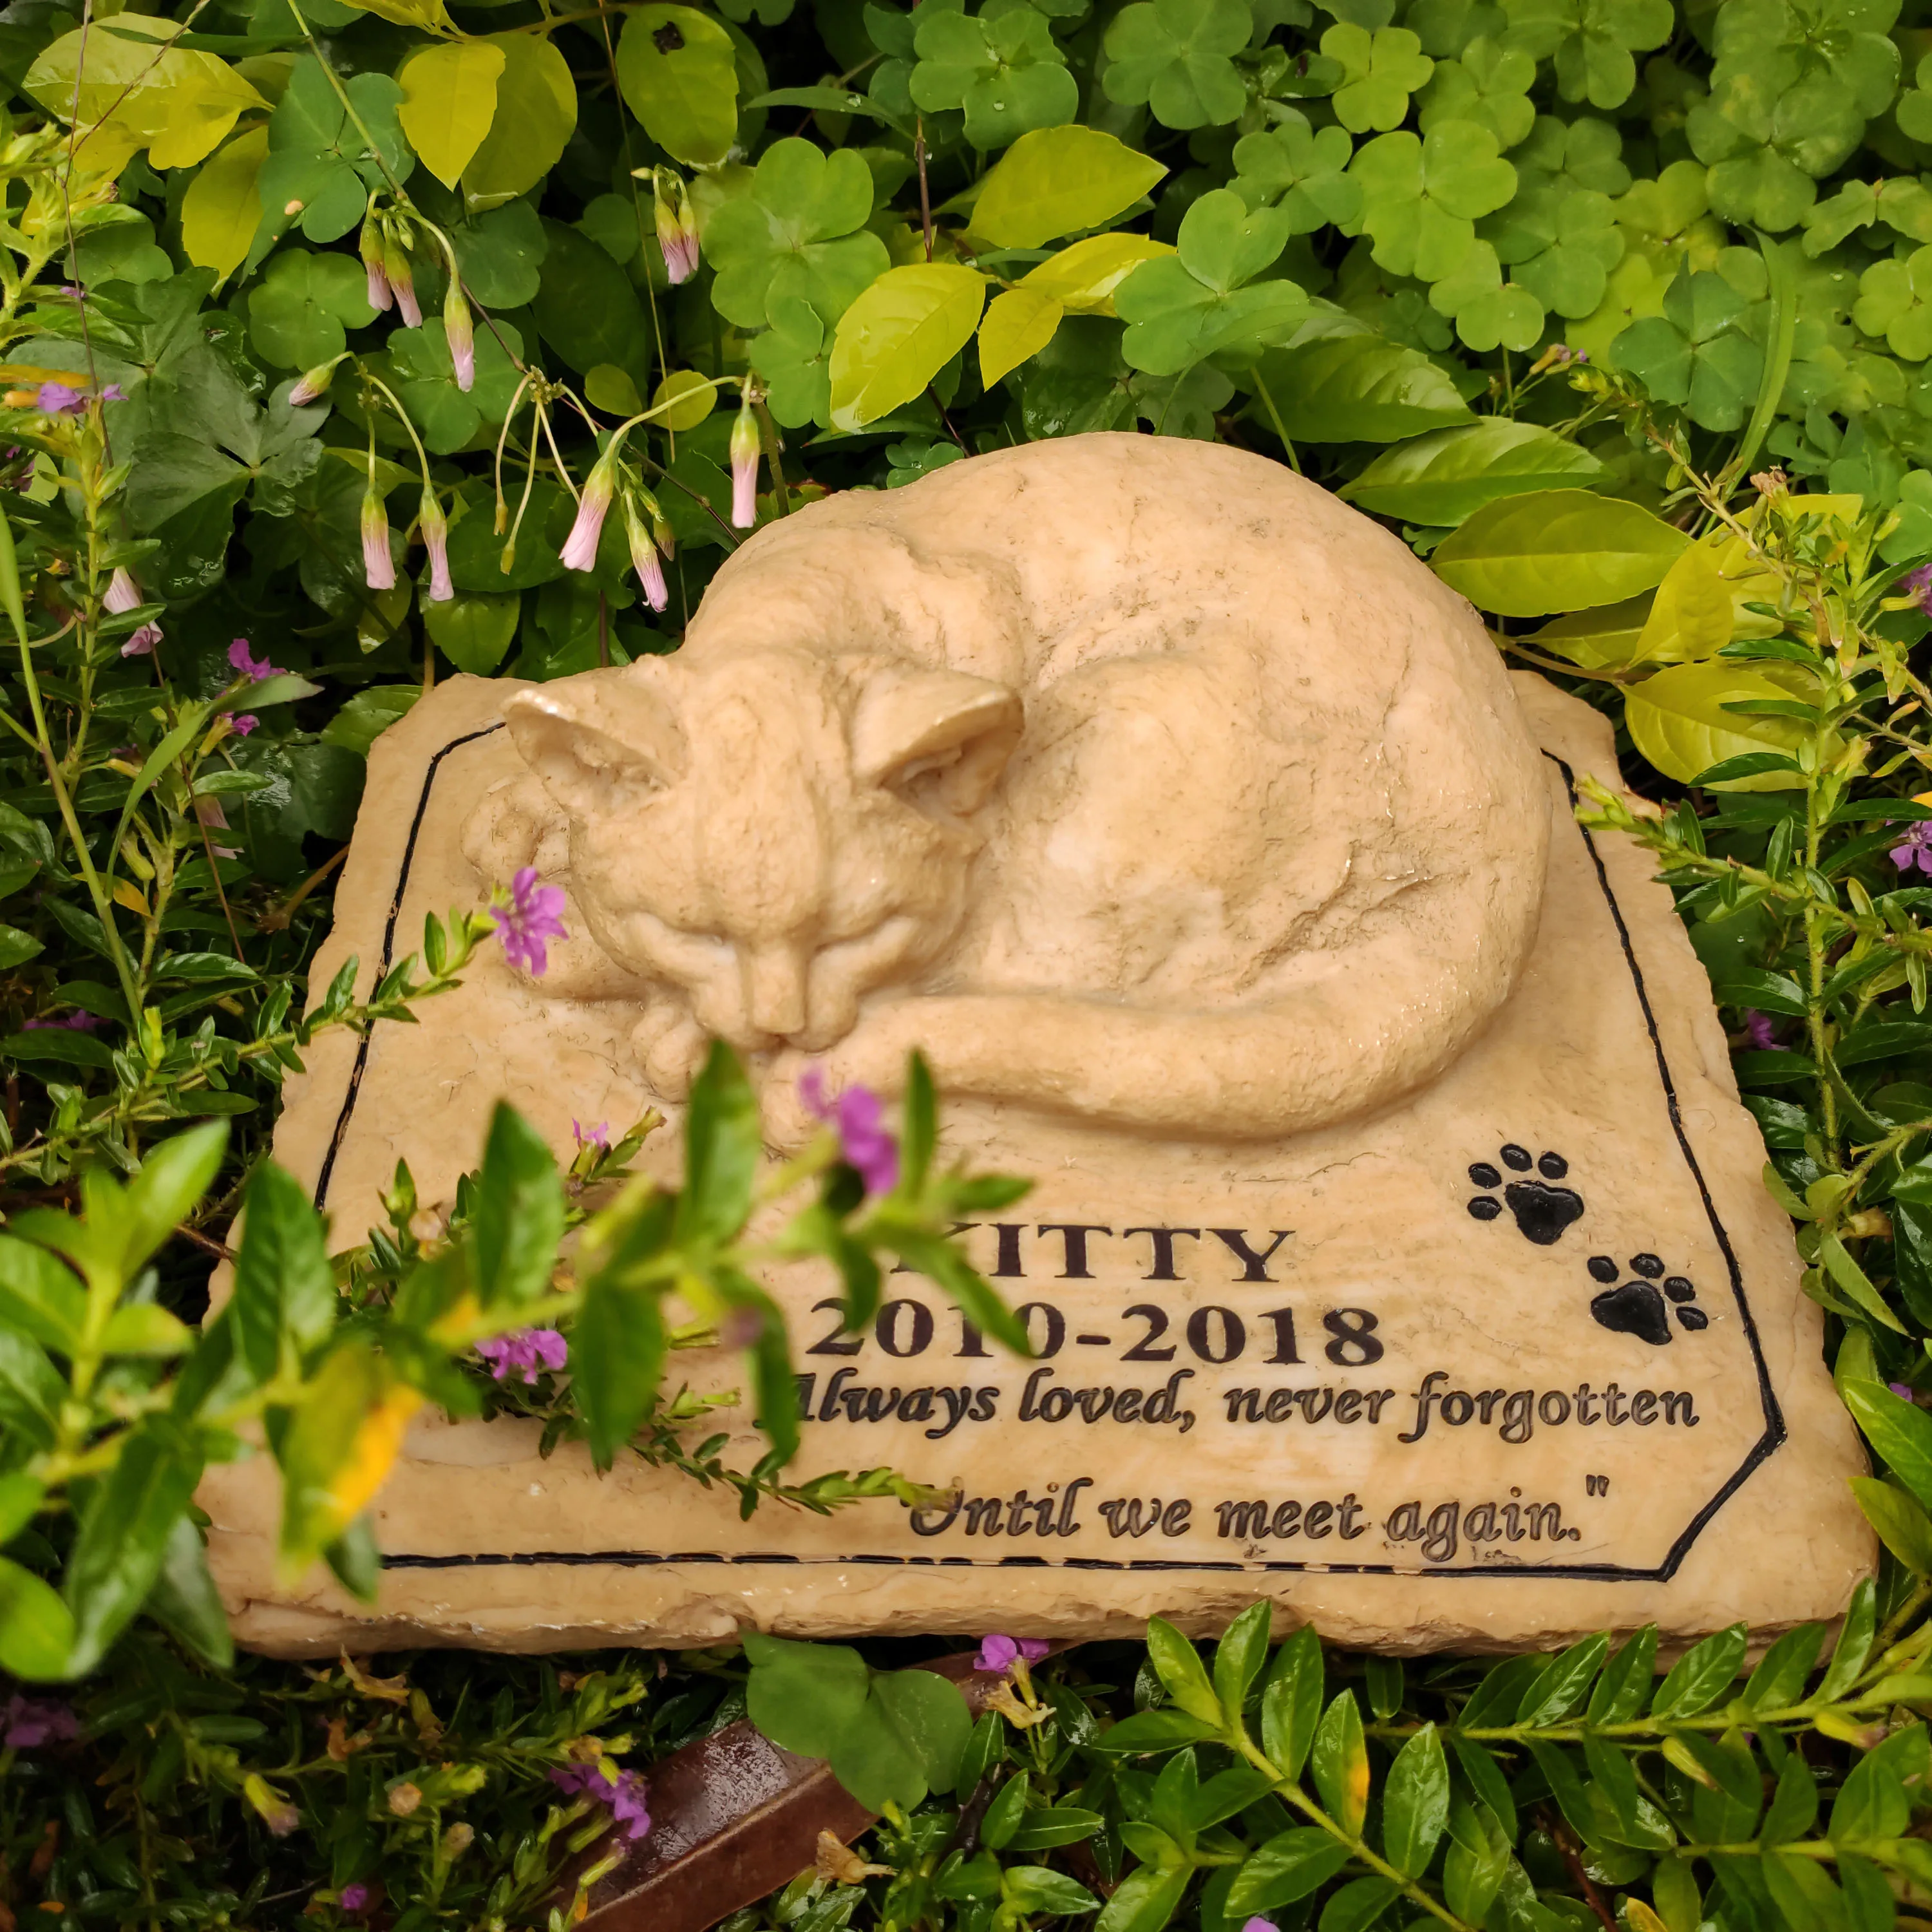 

Pet Memorial Stones Personalized Name Date Cat Memorial Stones Tombstones Outdoors or Indoors for Garden Backyard Grave Markers